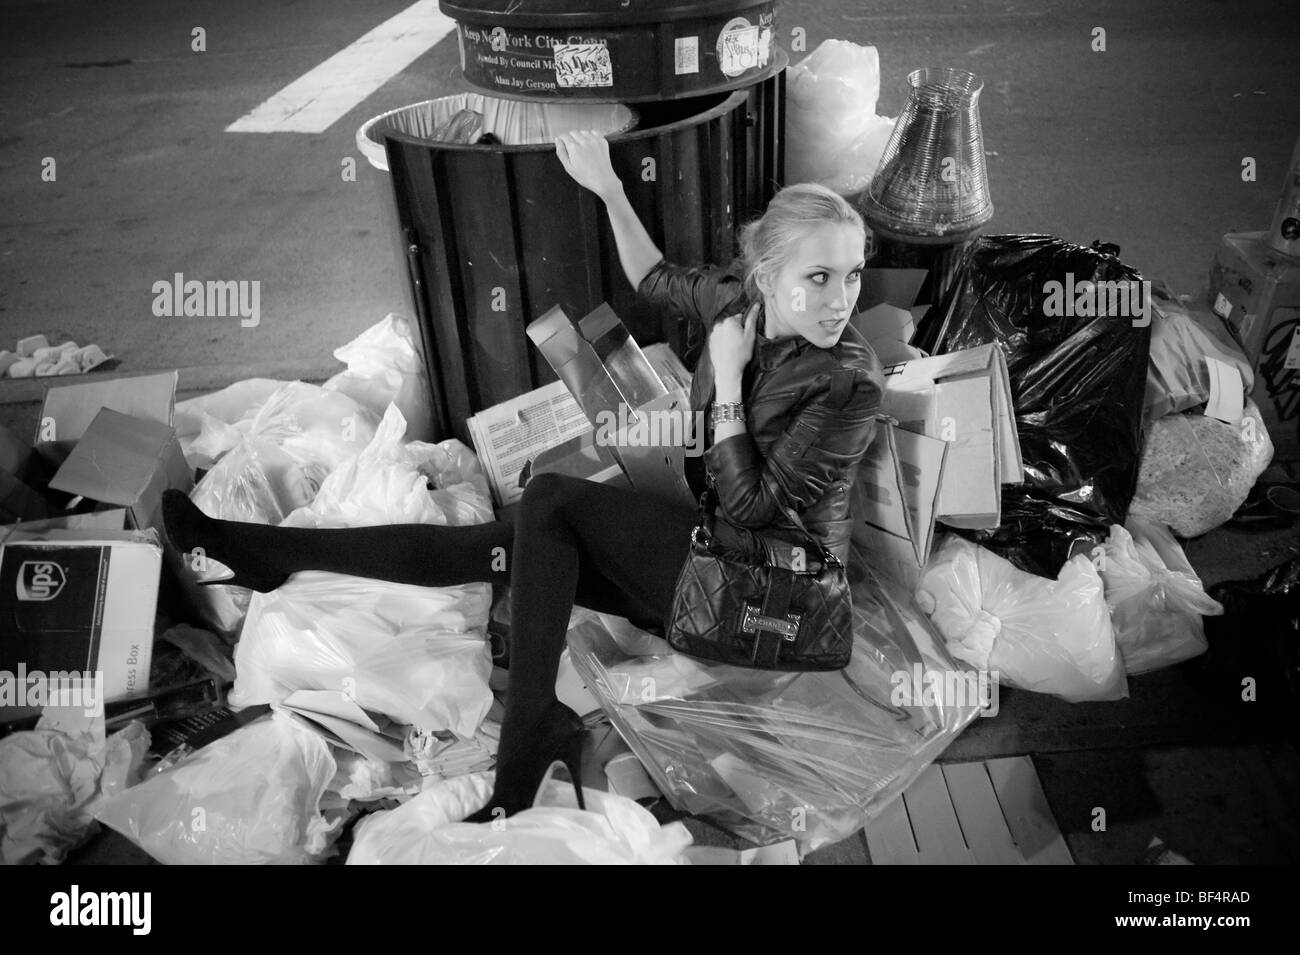 fashion model sitting in garbage pile Stock Photo